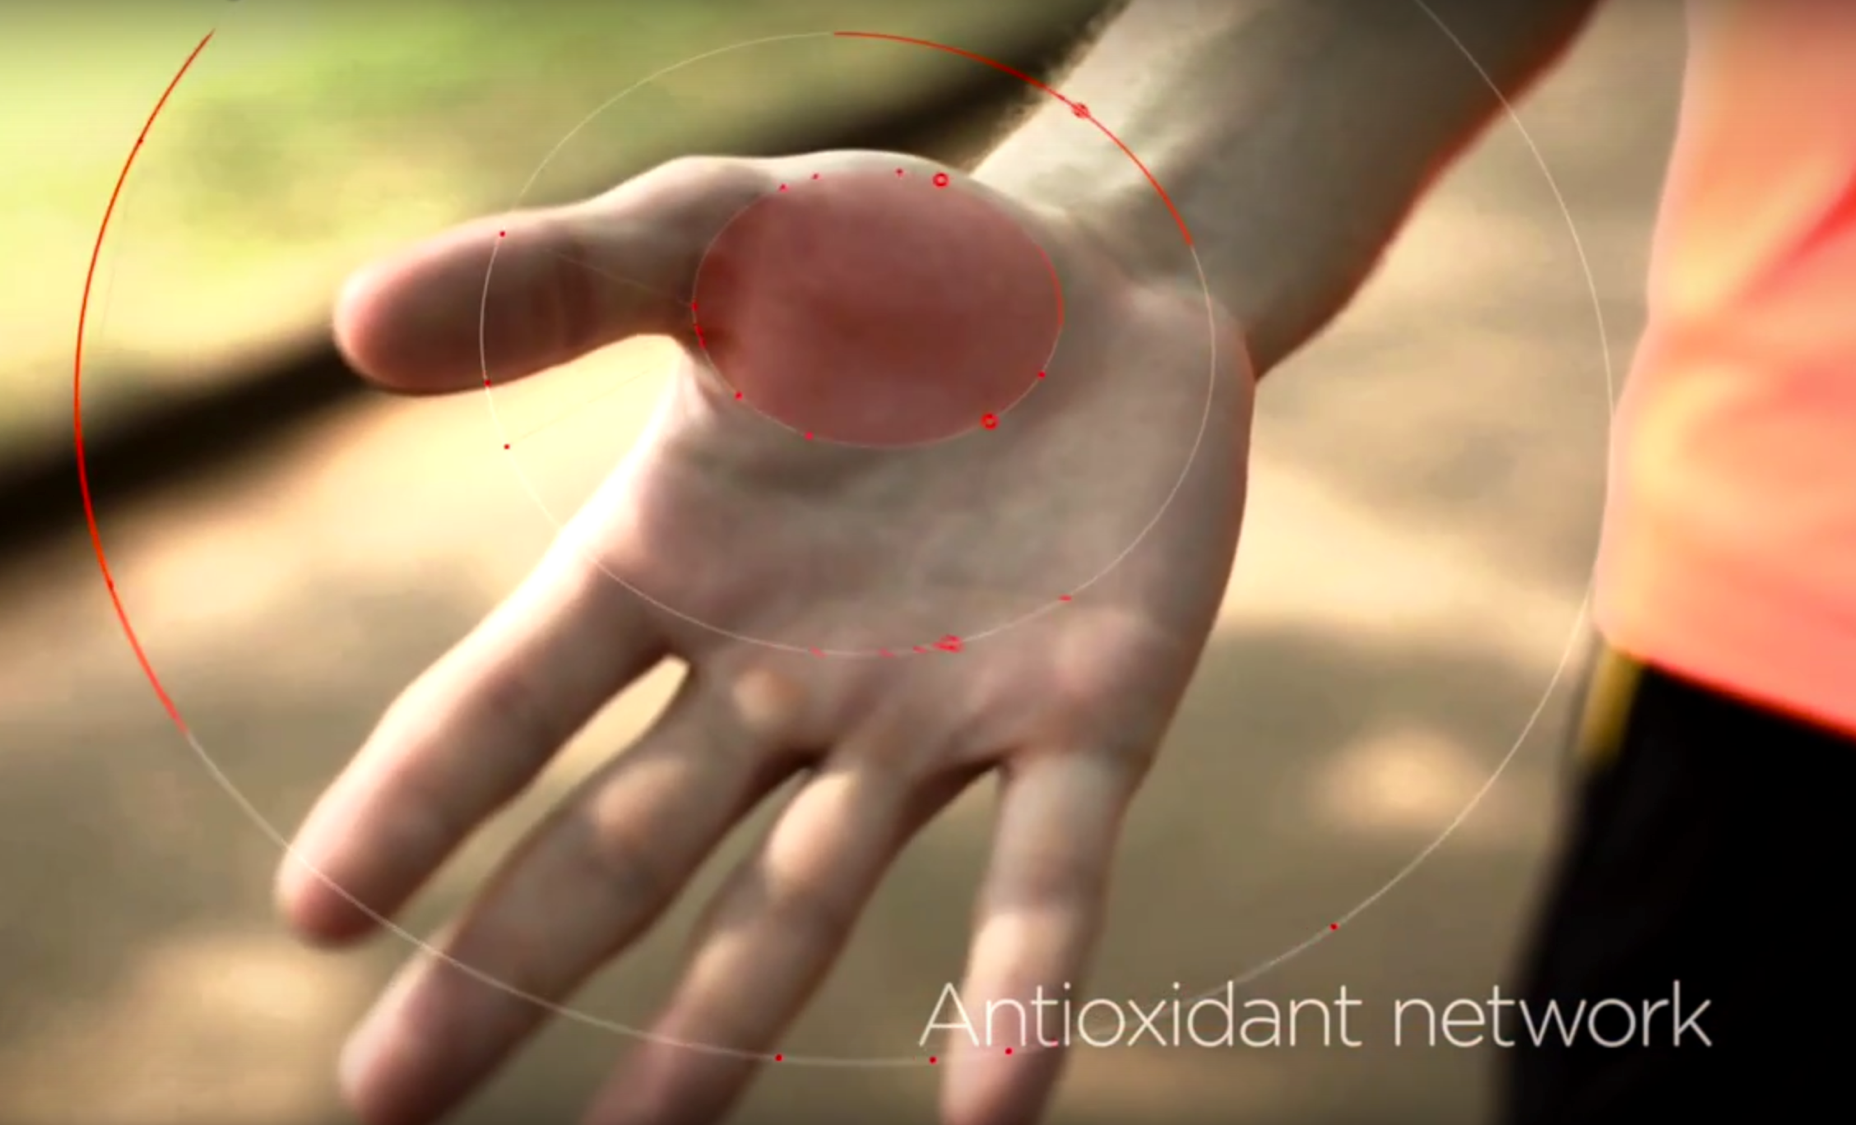 One X Sensor Palm Network of Antioxidants